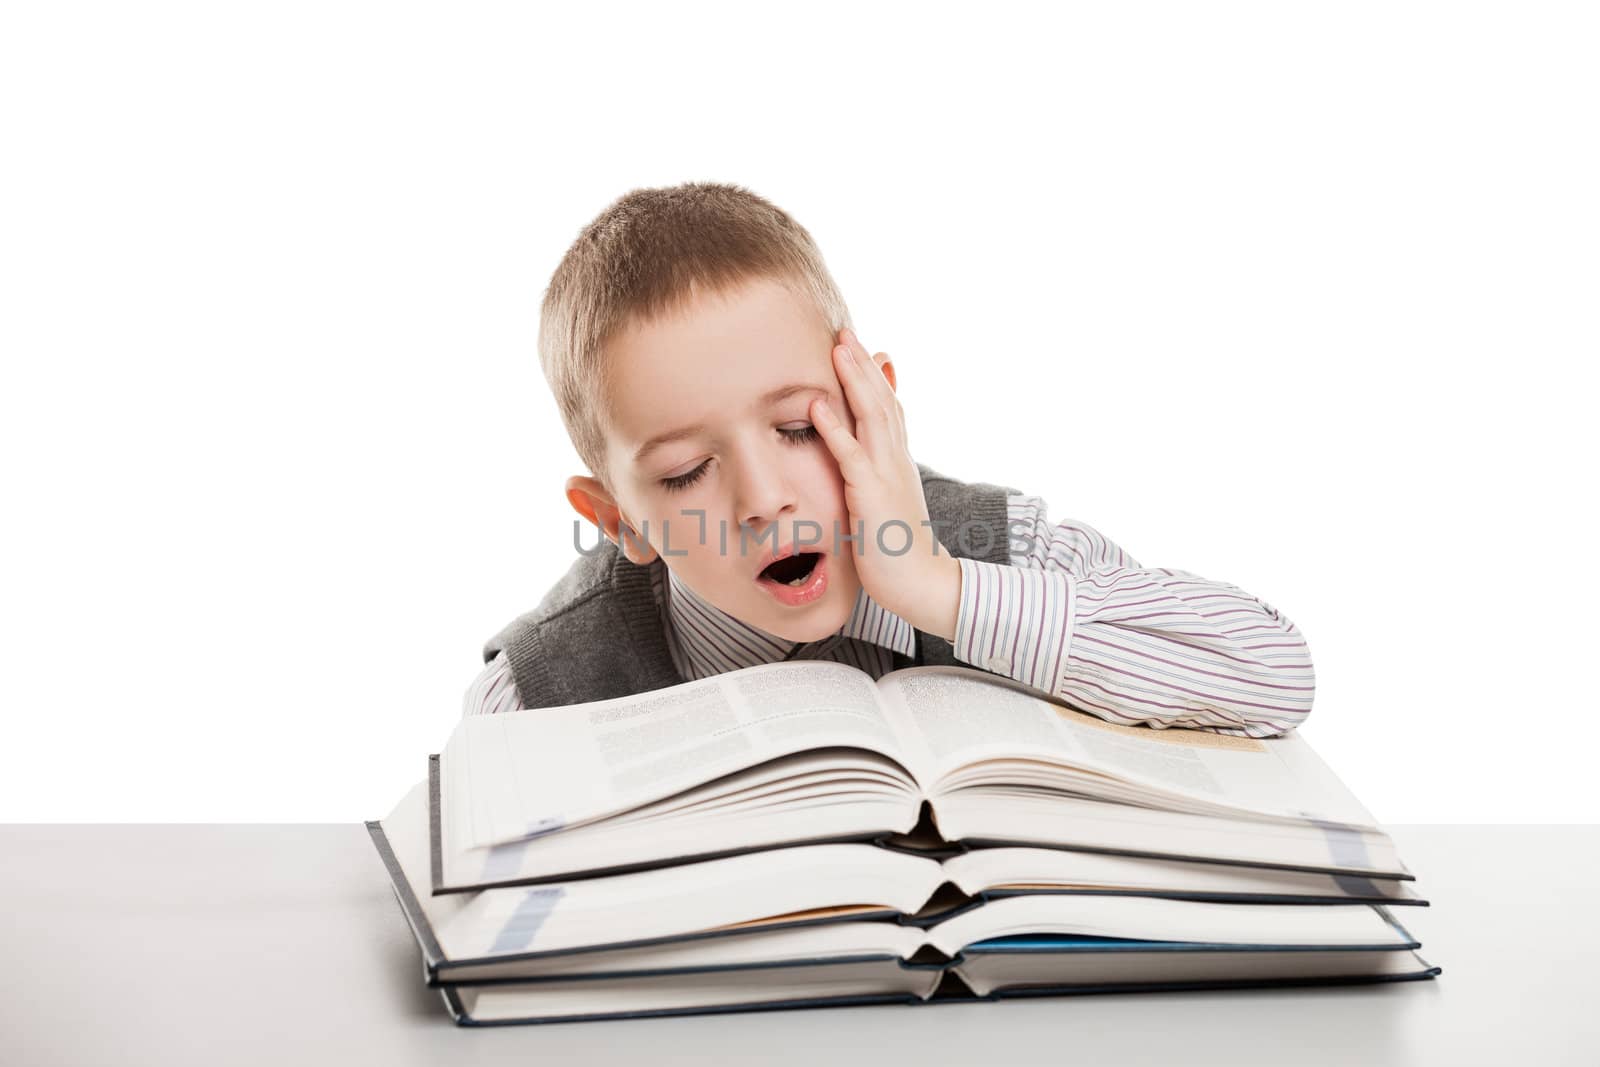 Child yawning on reading books by ia_64